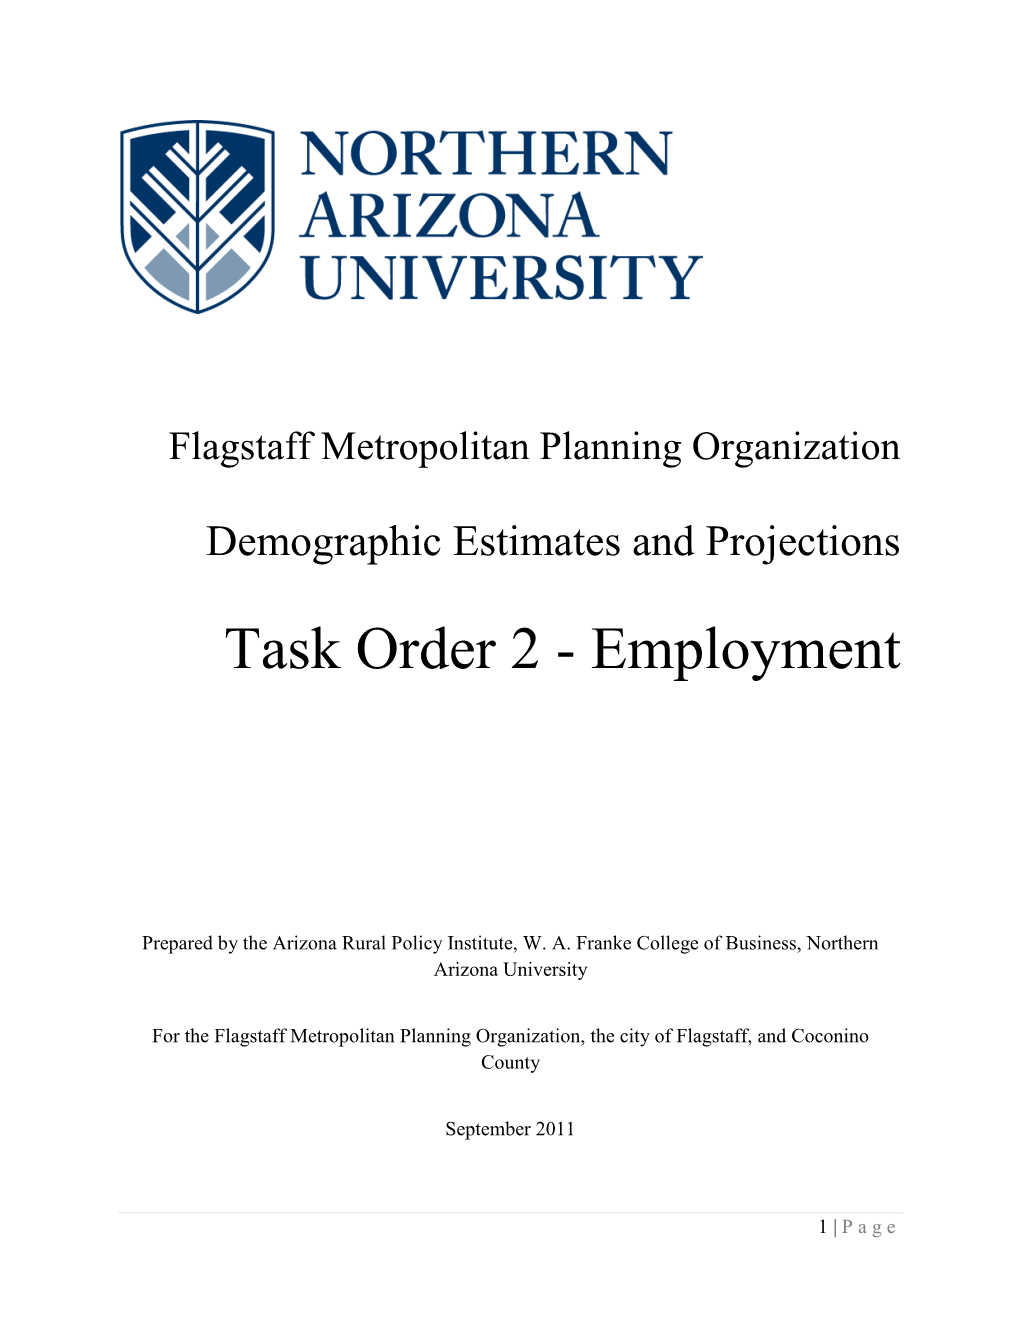 Task Order 2 - Employment